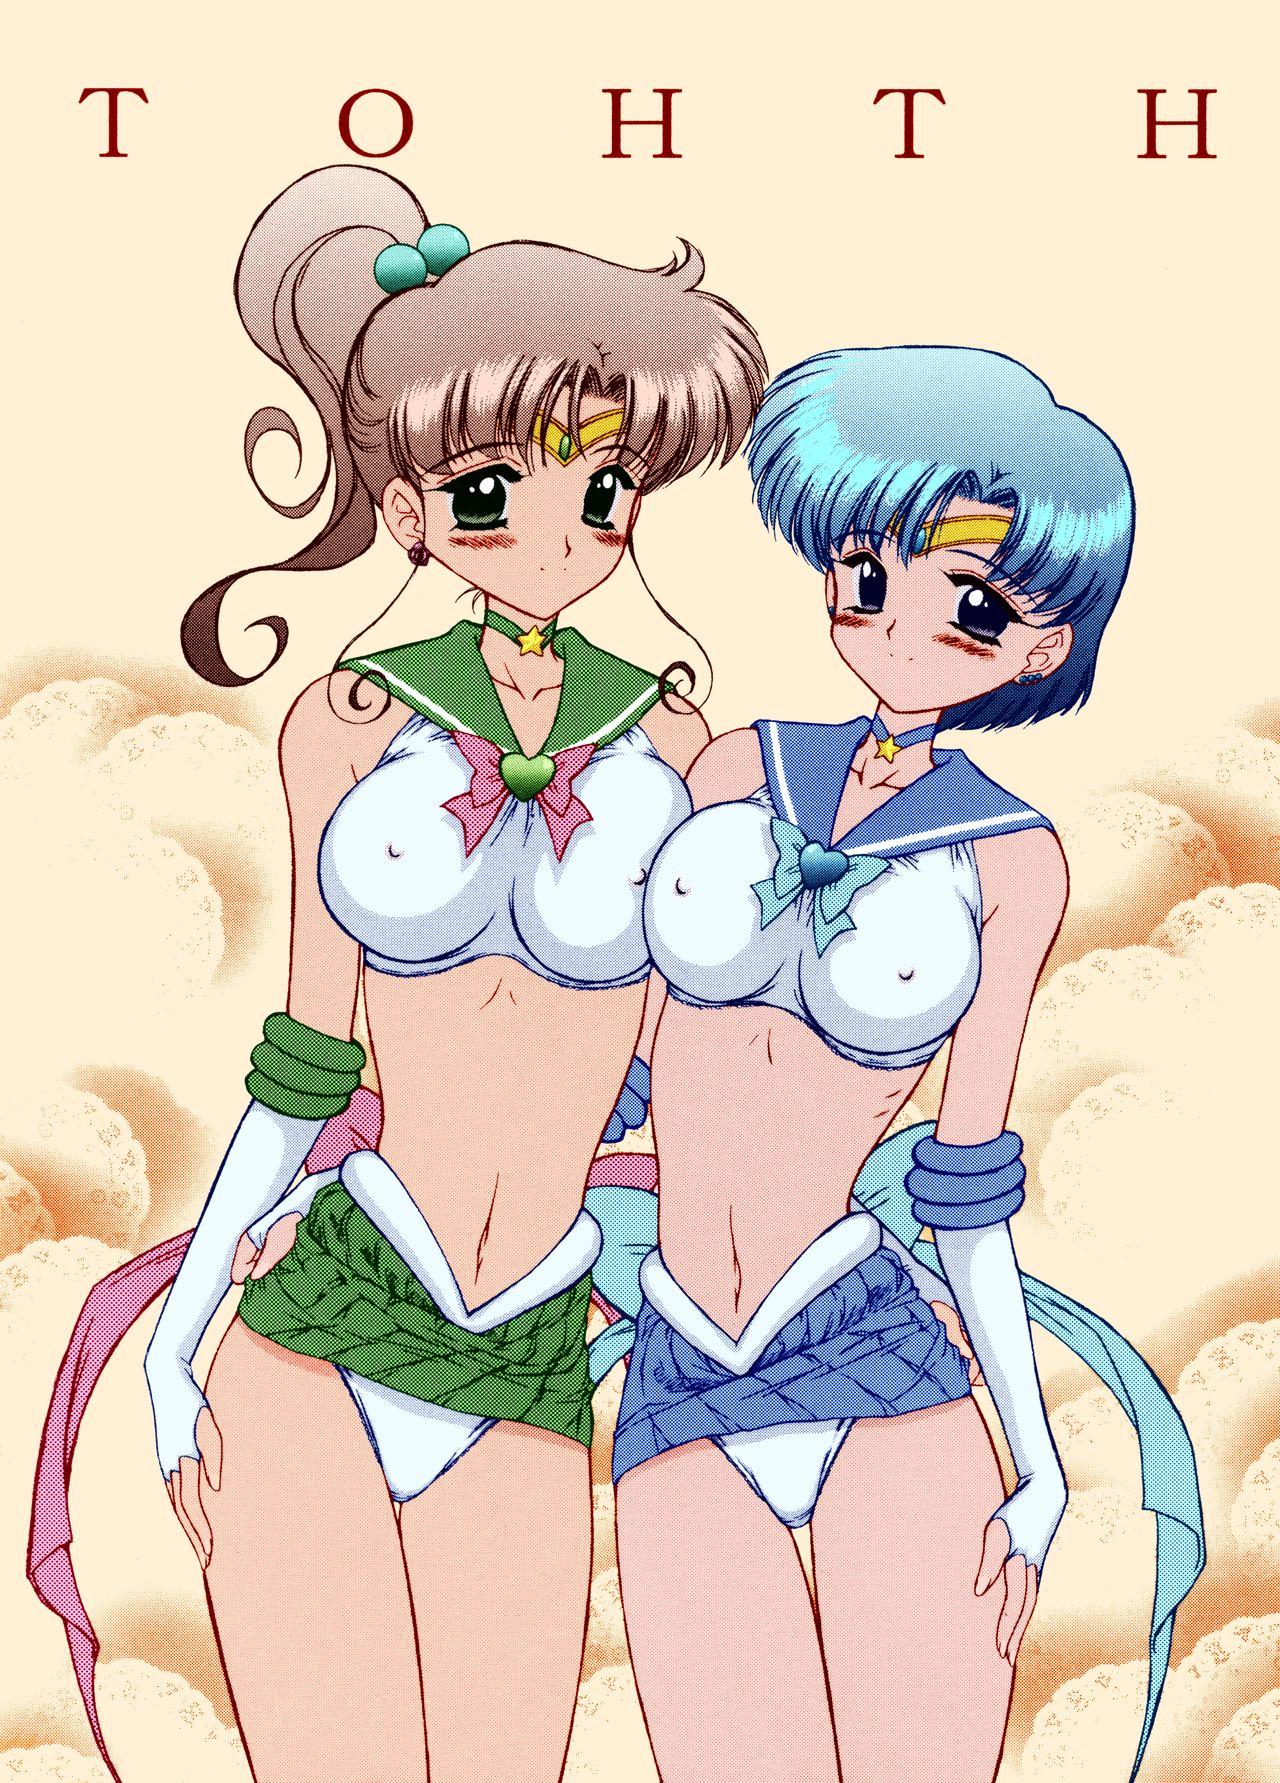 Stockings Tohth - Sailor moon Porno Amateur - Picture 1